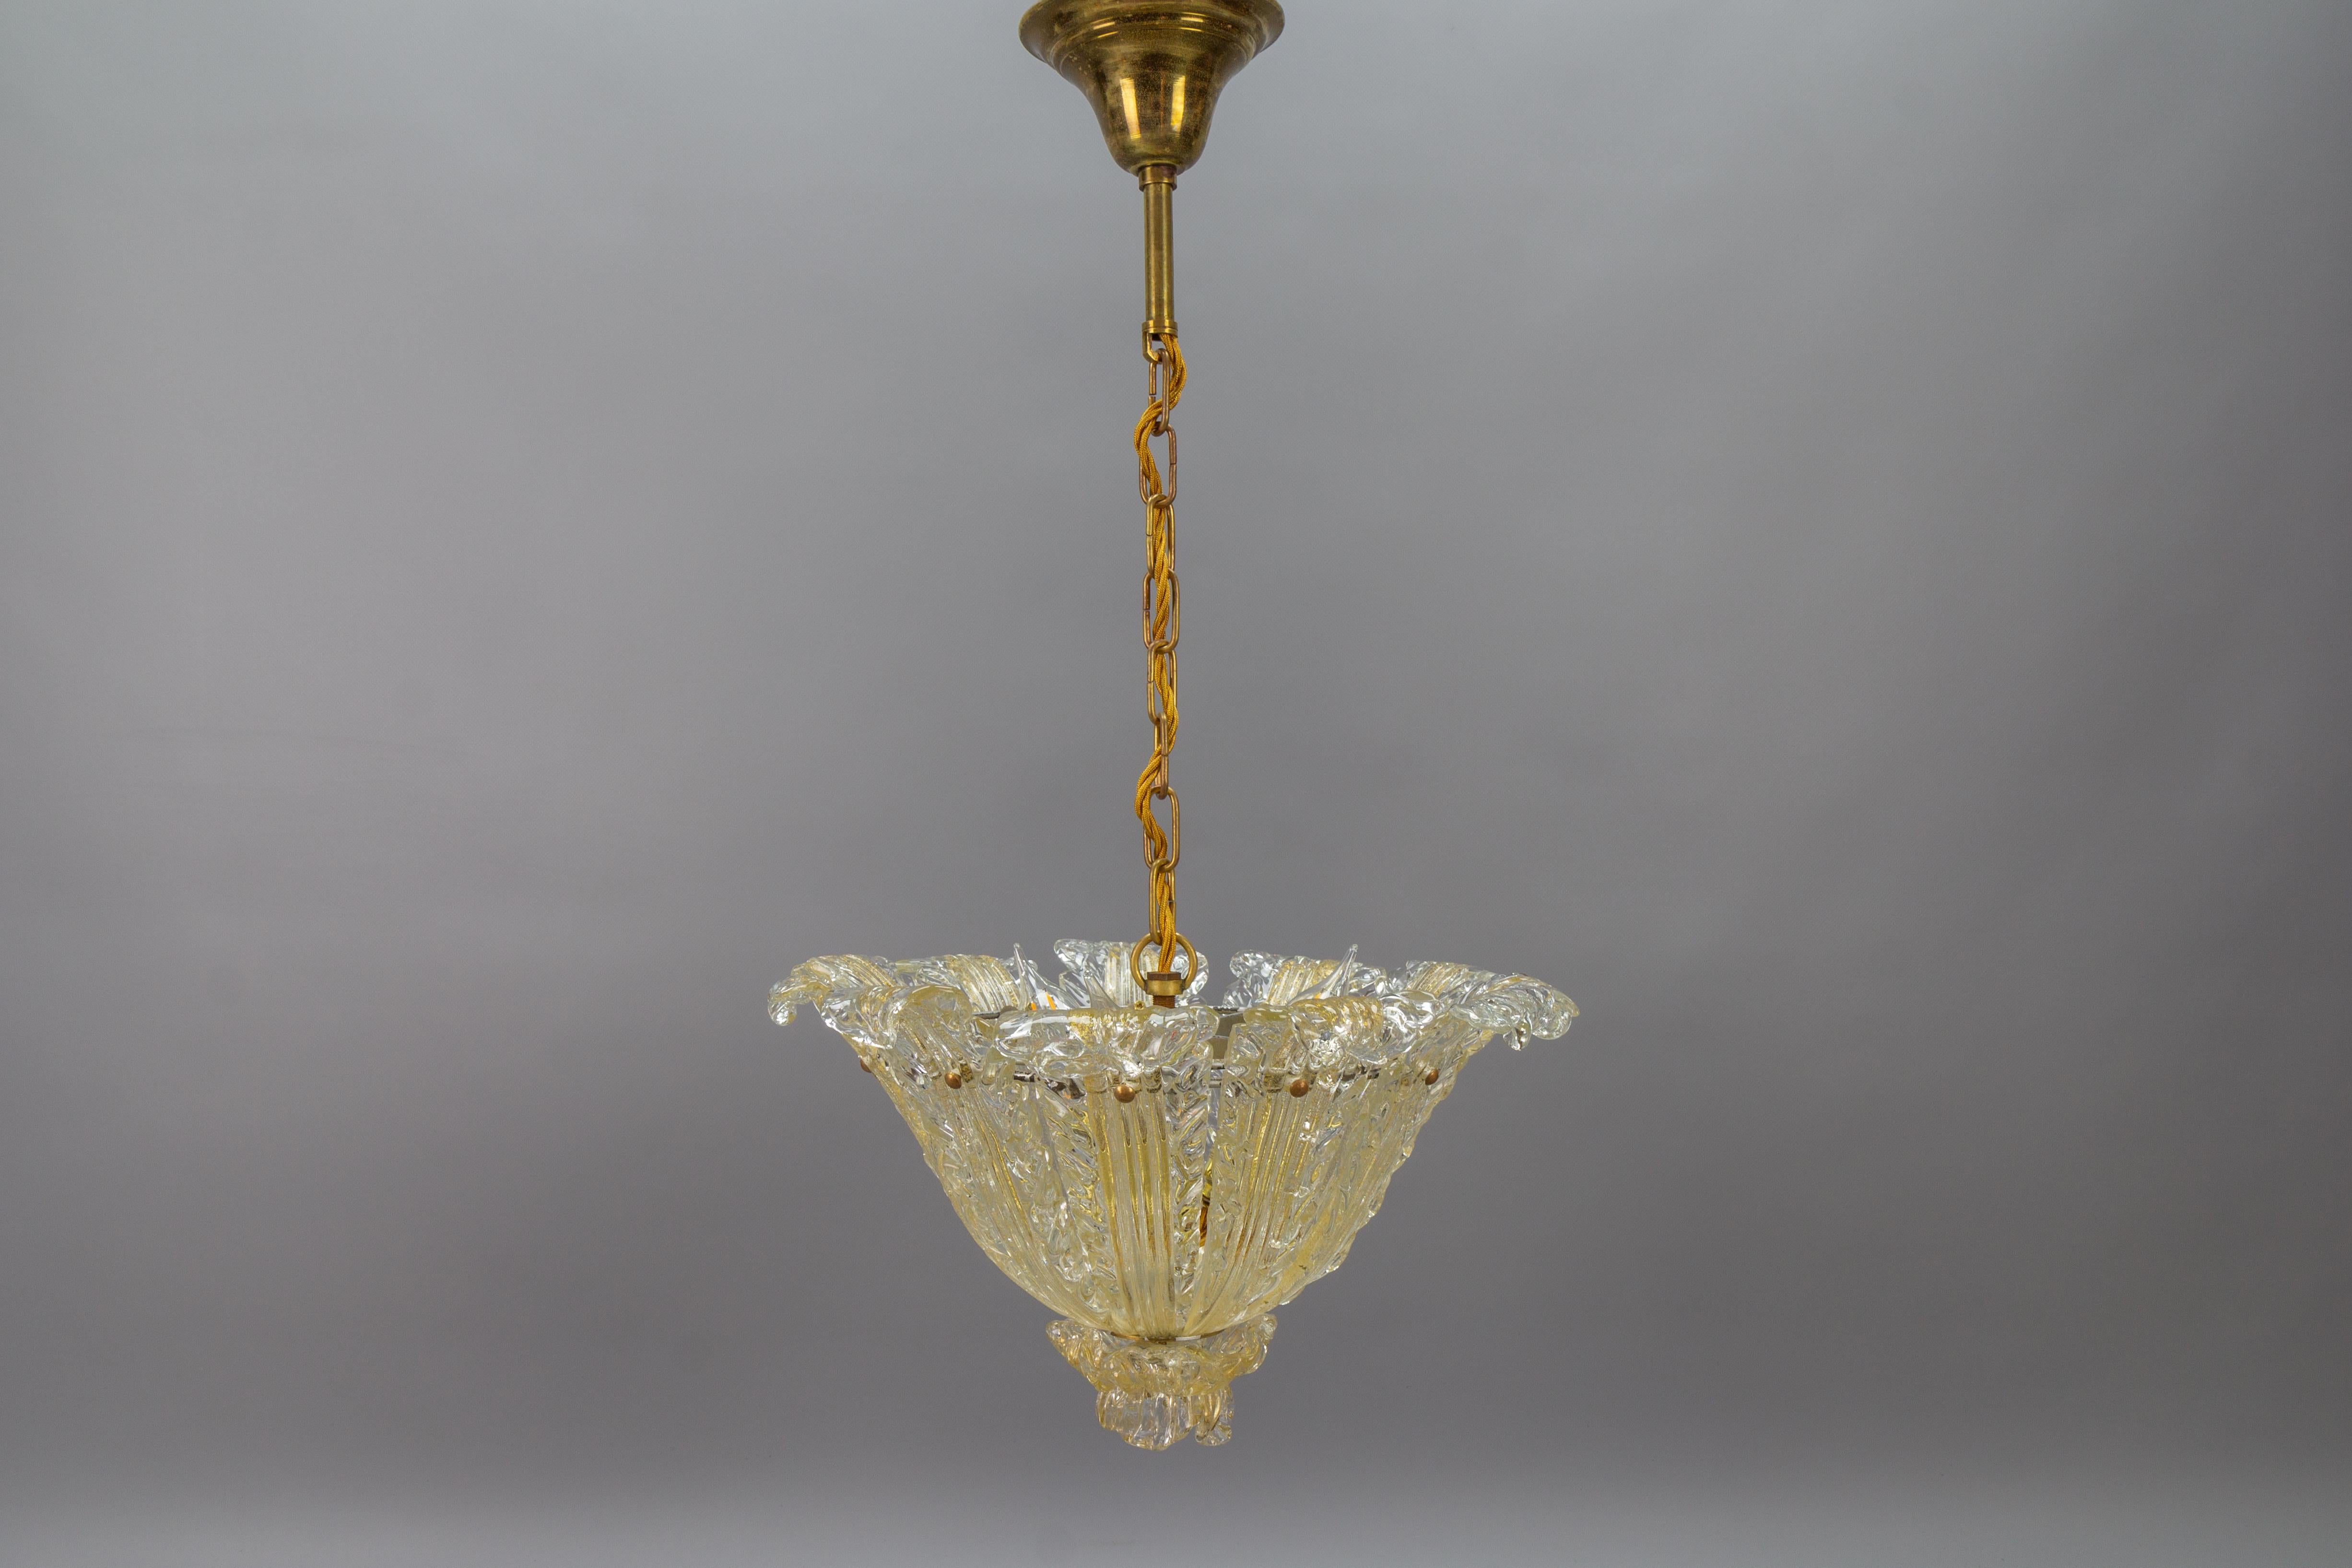 Italian Mid-Century Murano Glass Gold Inclusion Foliage Pendant Light, 1950s For Sale 8